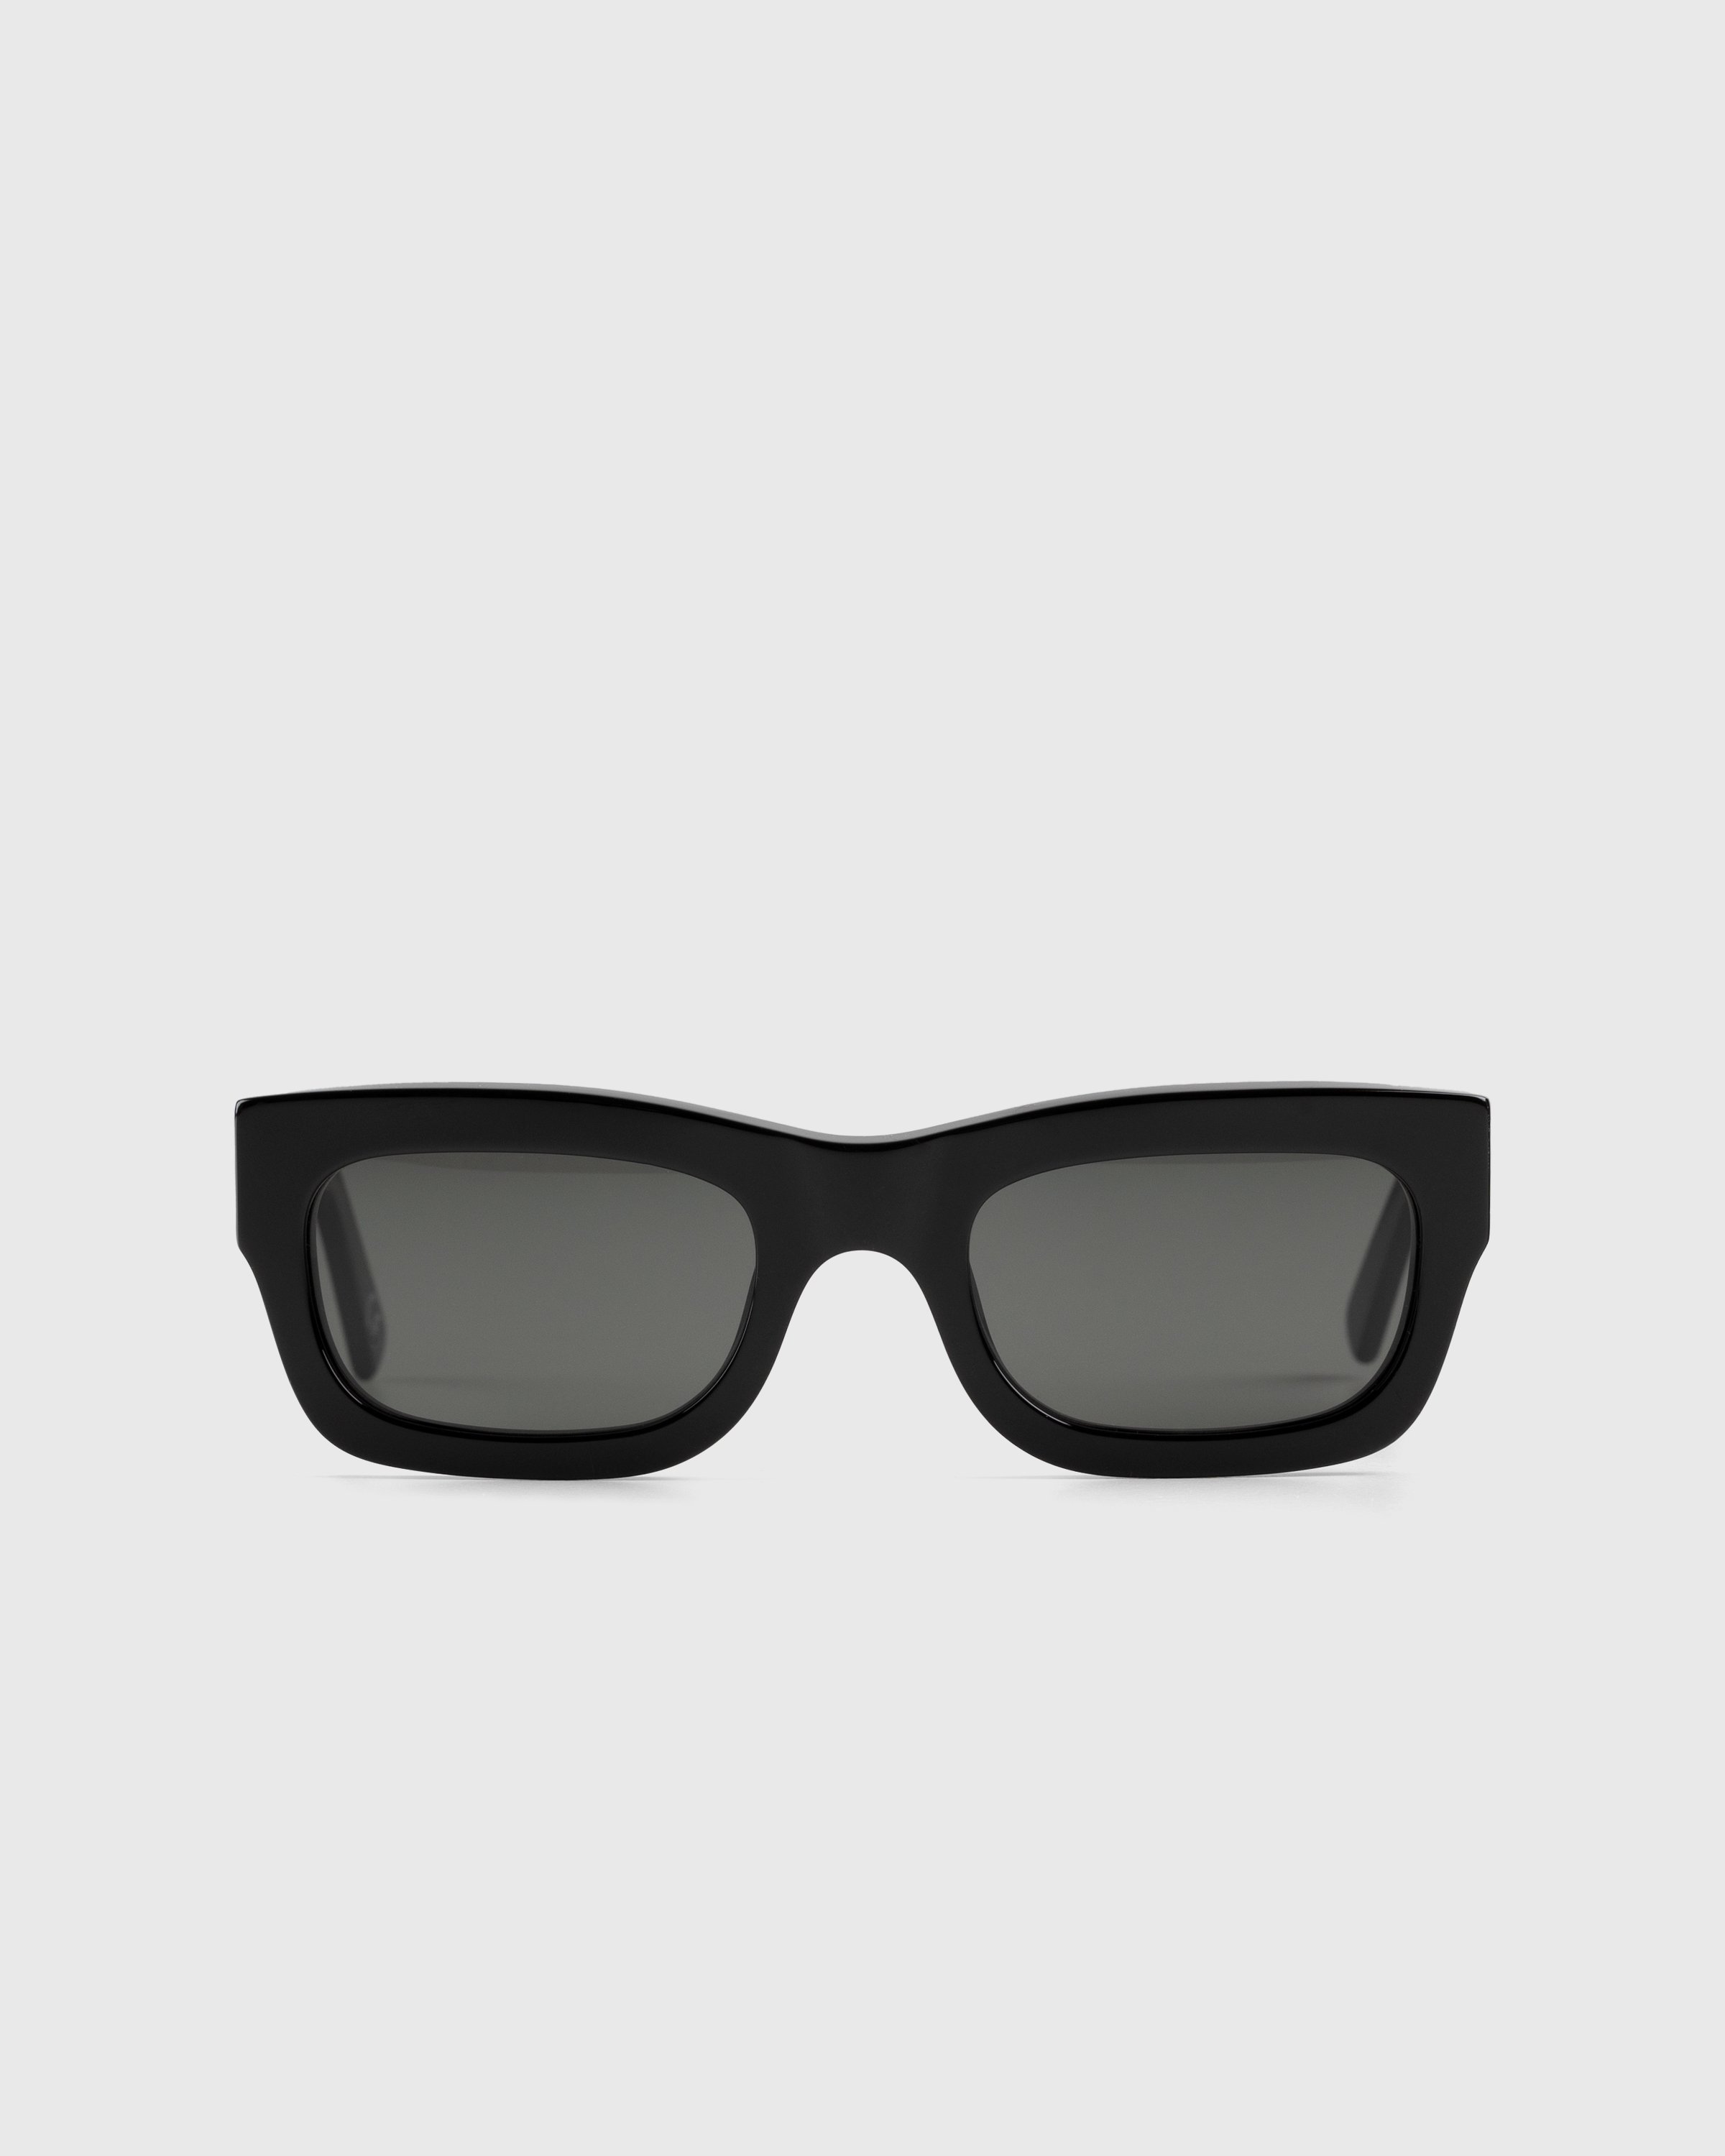 Marni - Kawasan Falls Sunglasses Black - Accessories - Black - Image 1